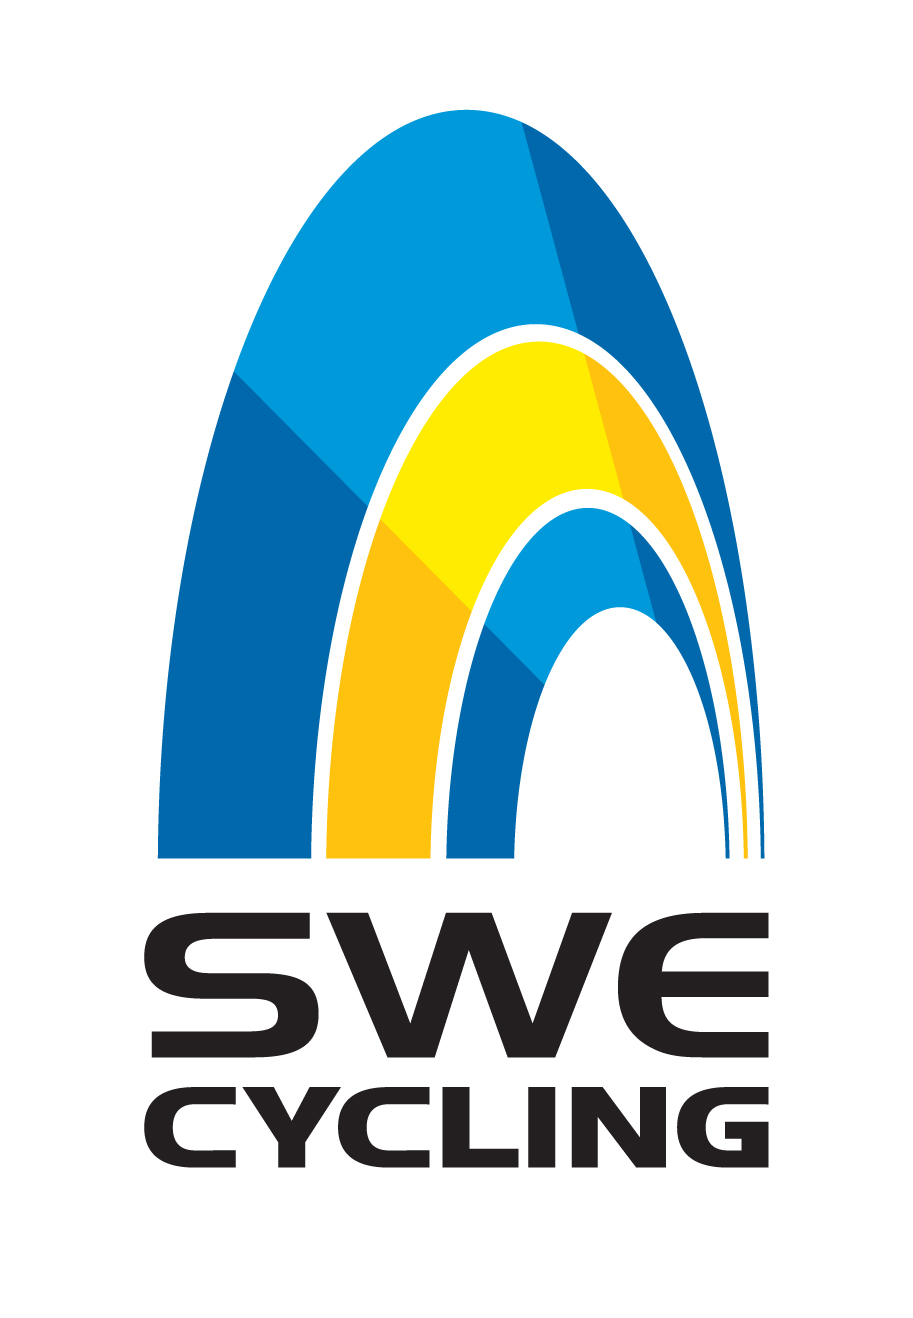 SWE CYCLING